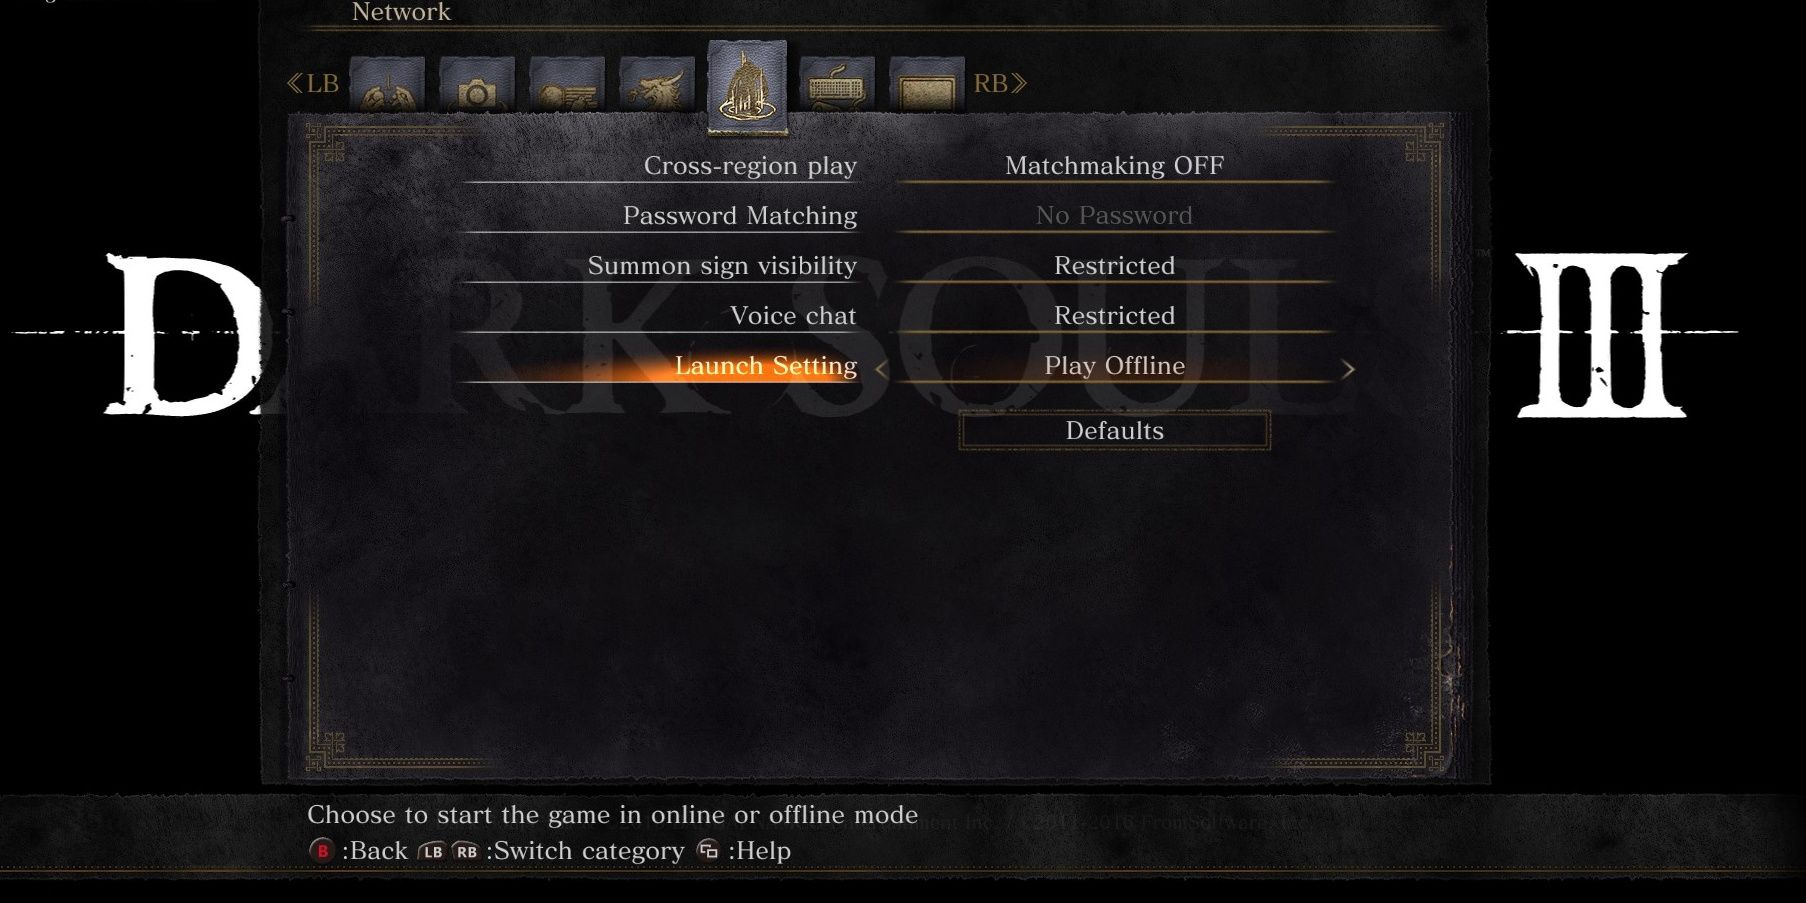 Dark Souls 3 Network Tab In Options Menu. Credit To Giant Bomb.